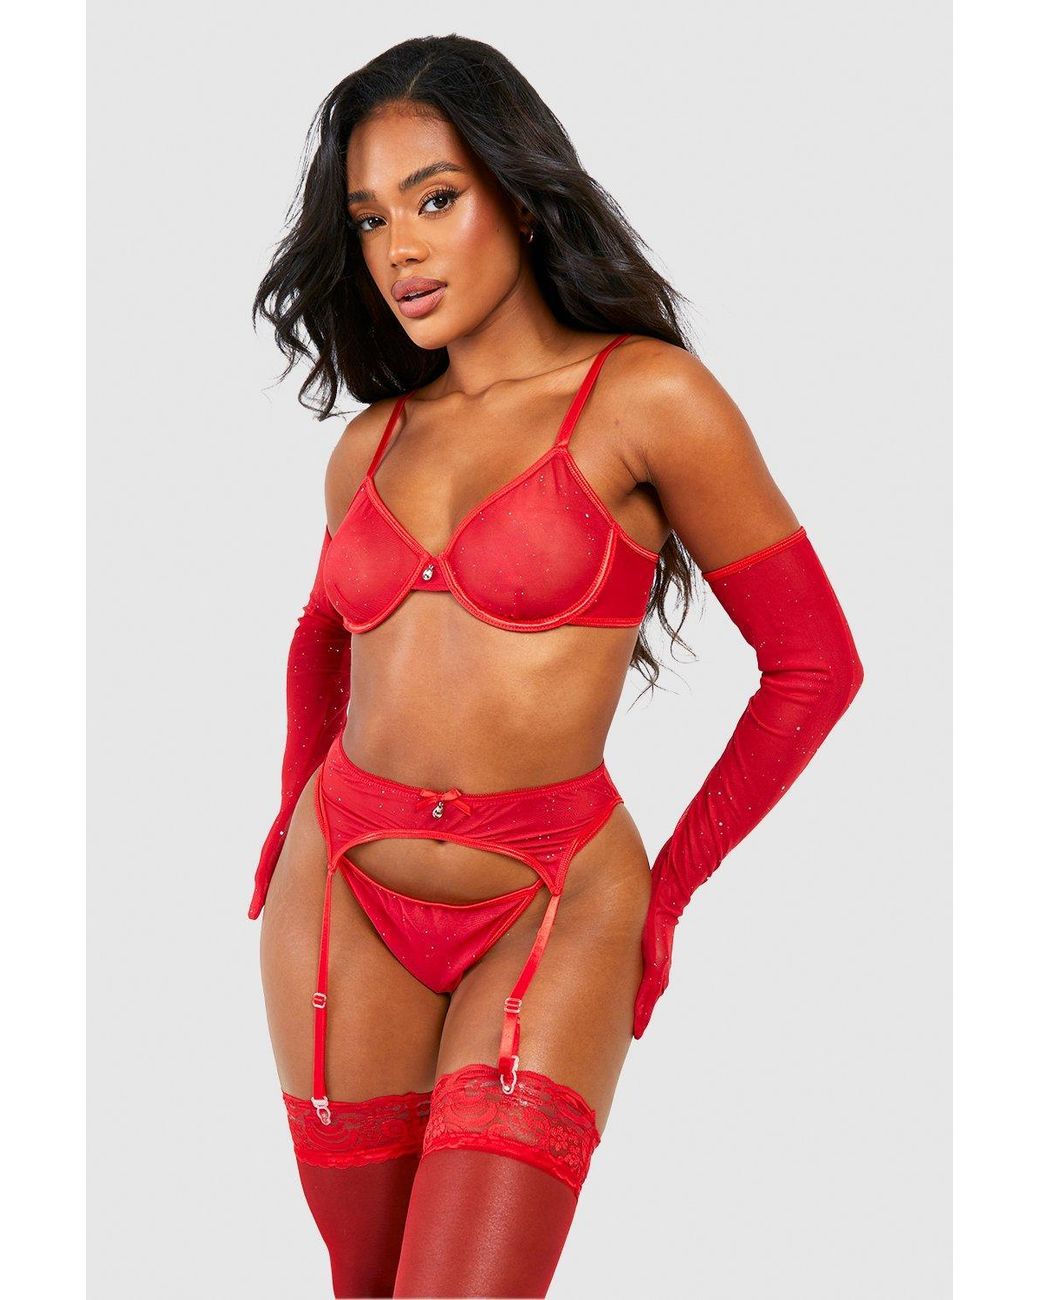 https://cdna.lystit.com/1040/1300/n/photos/debenhams/050c5aba/boohoo-designer-Red-Sparkle-Lingerie-And-Suspender-Set-With-Gloves.jpeg